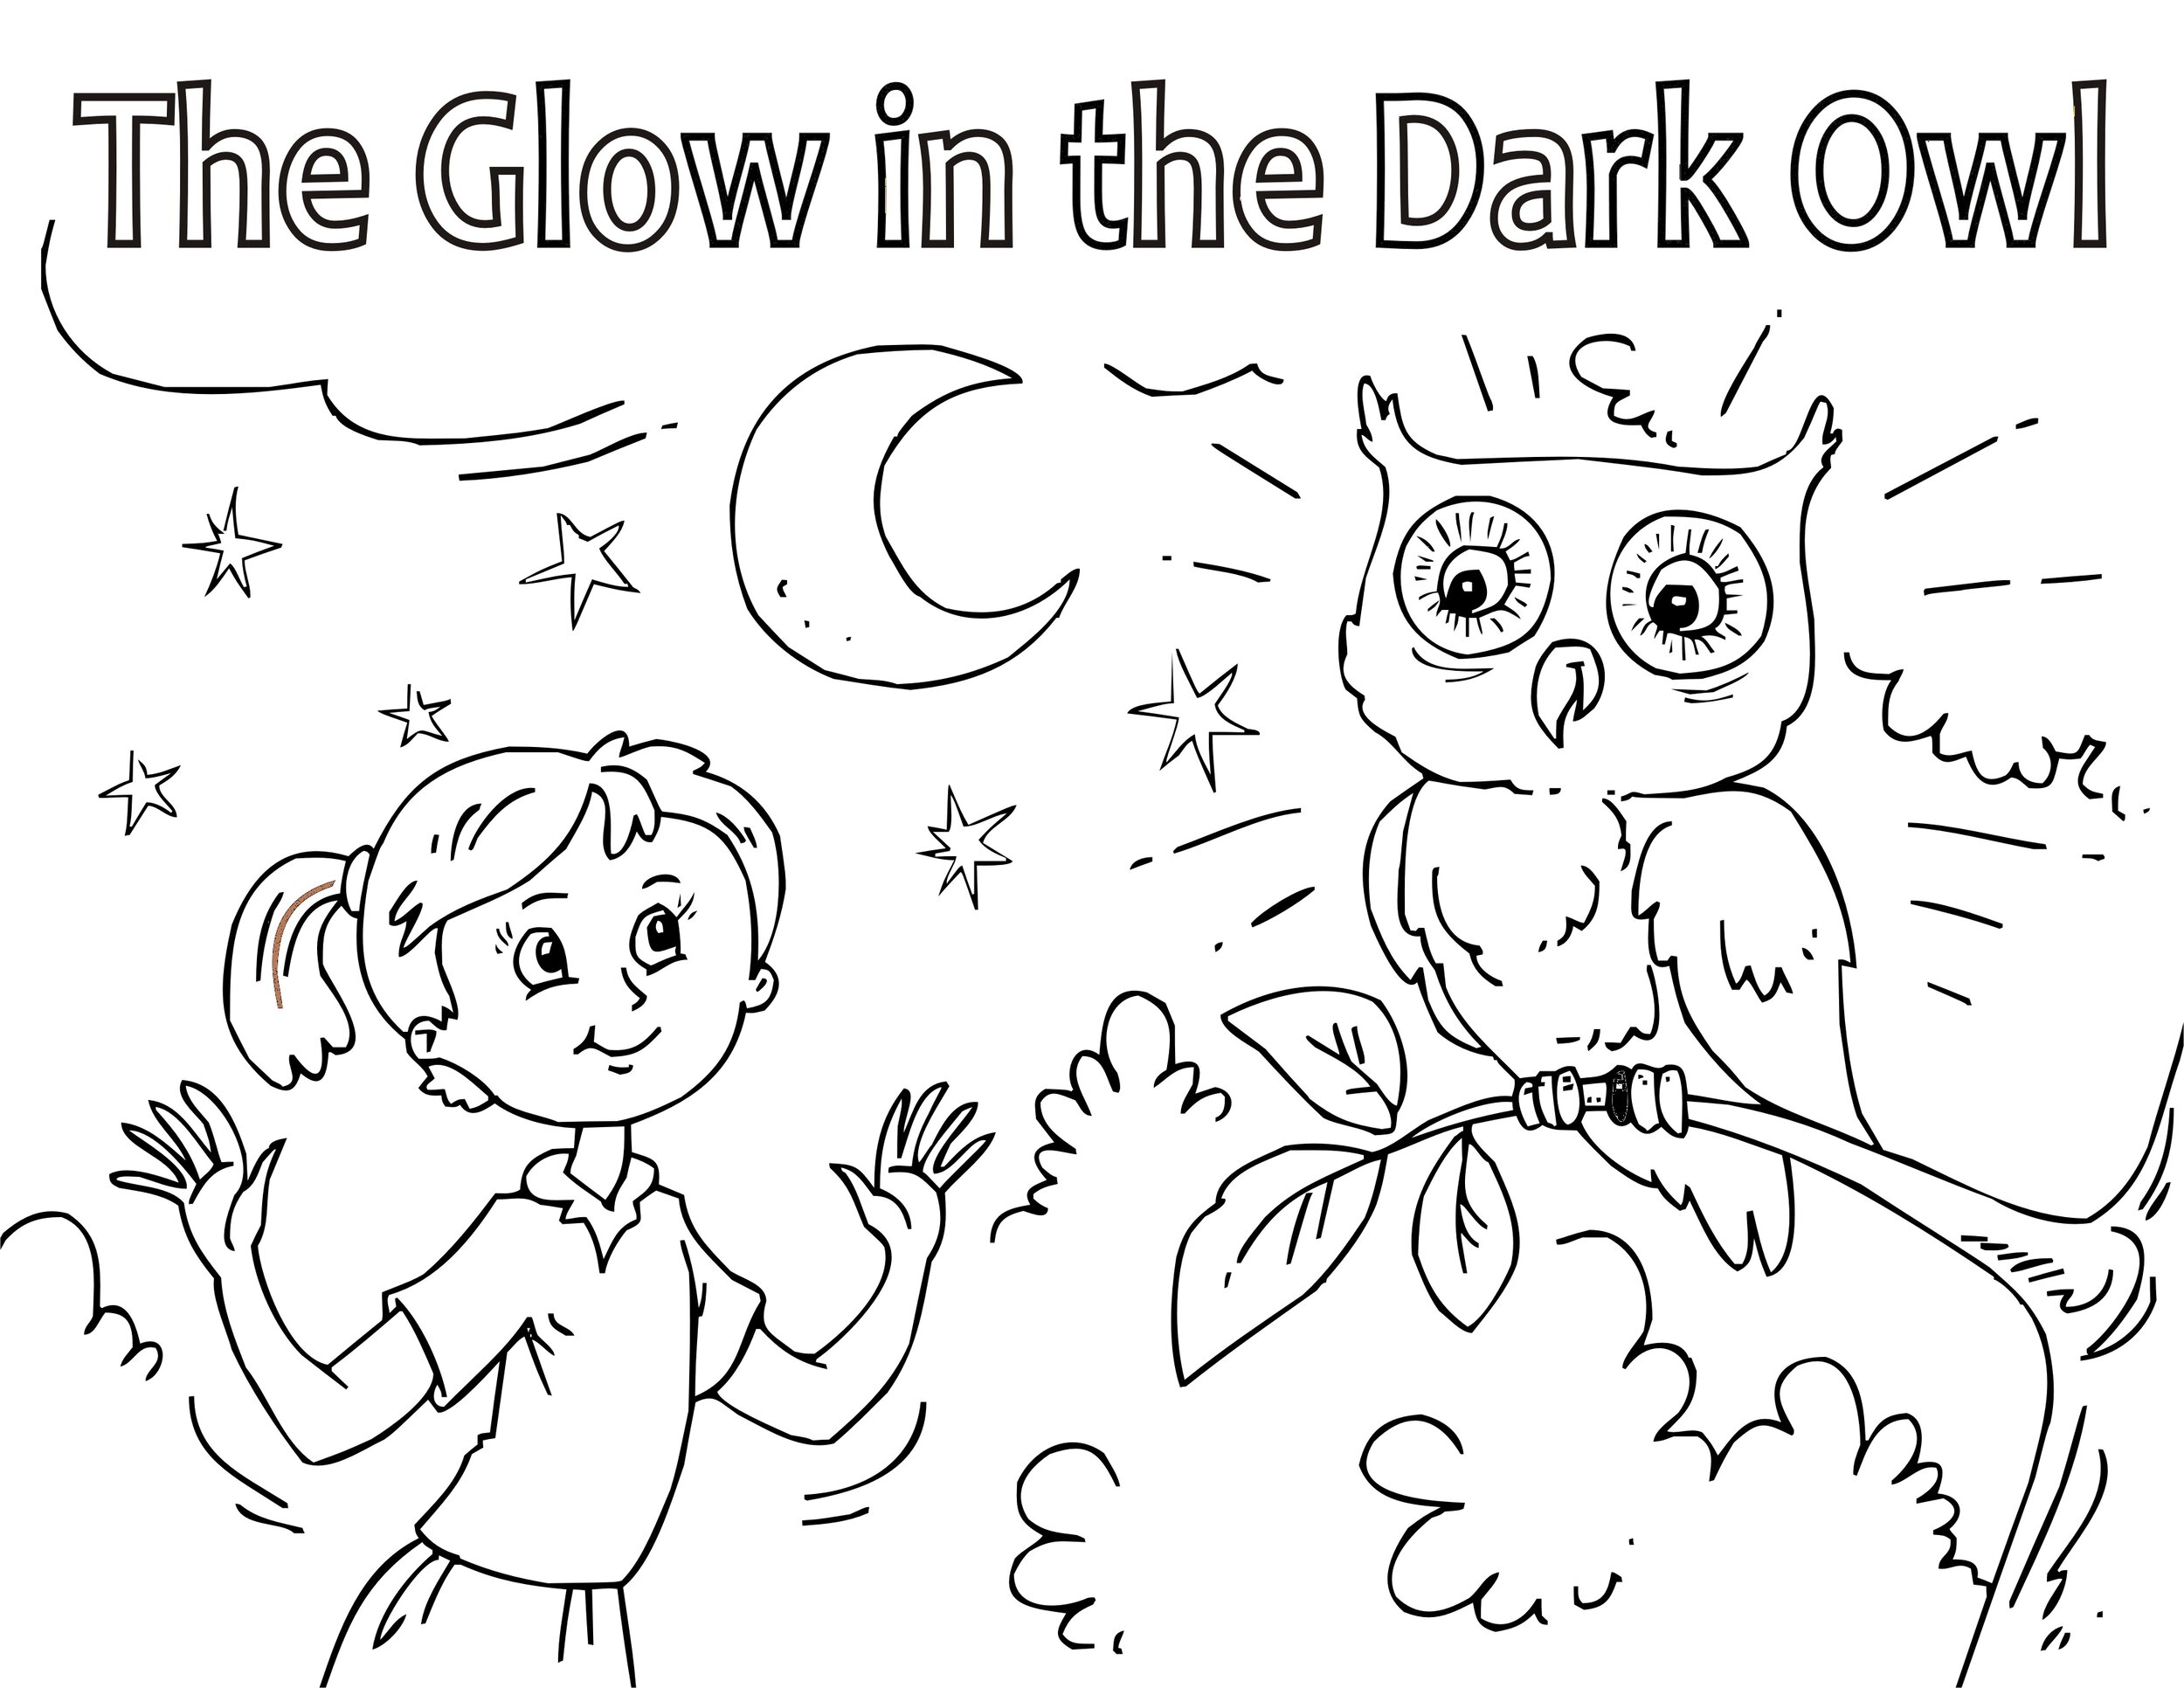 The Glow in the Dark Owl